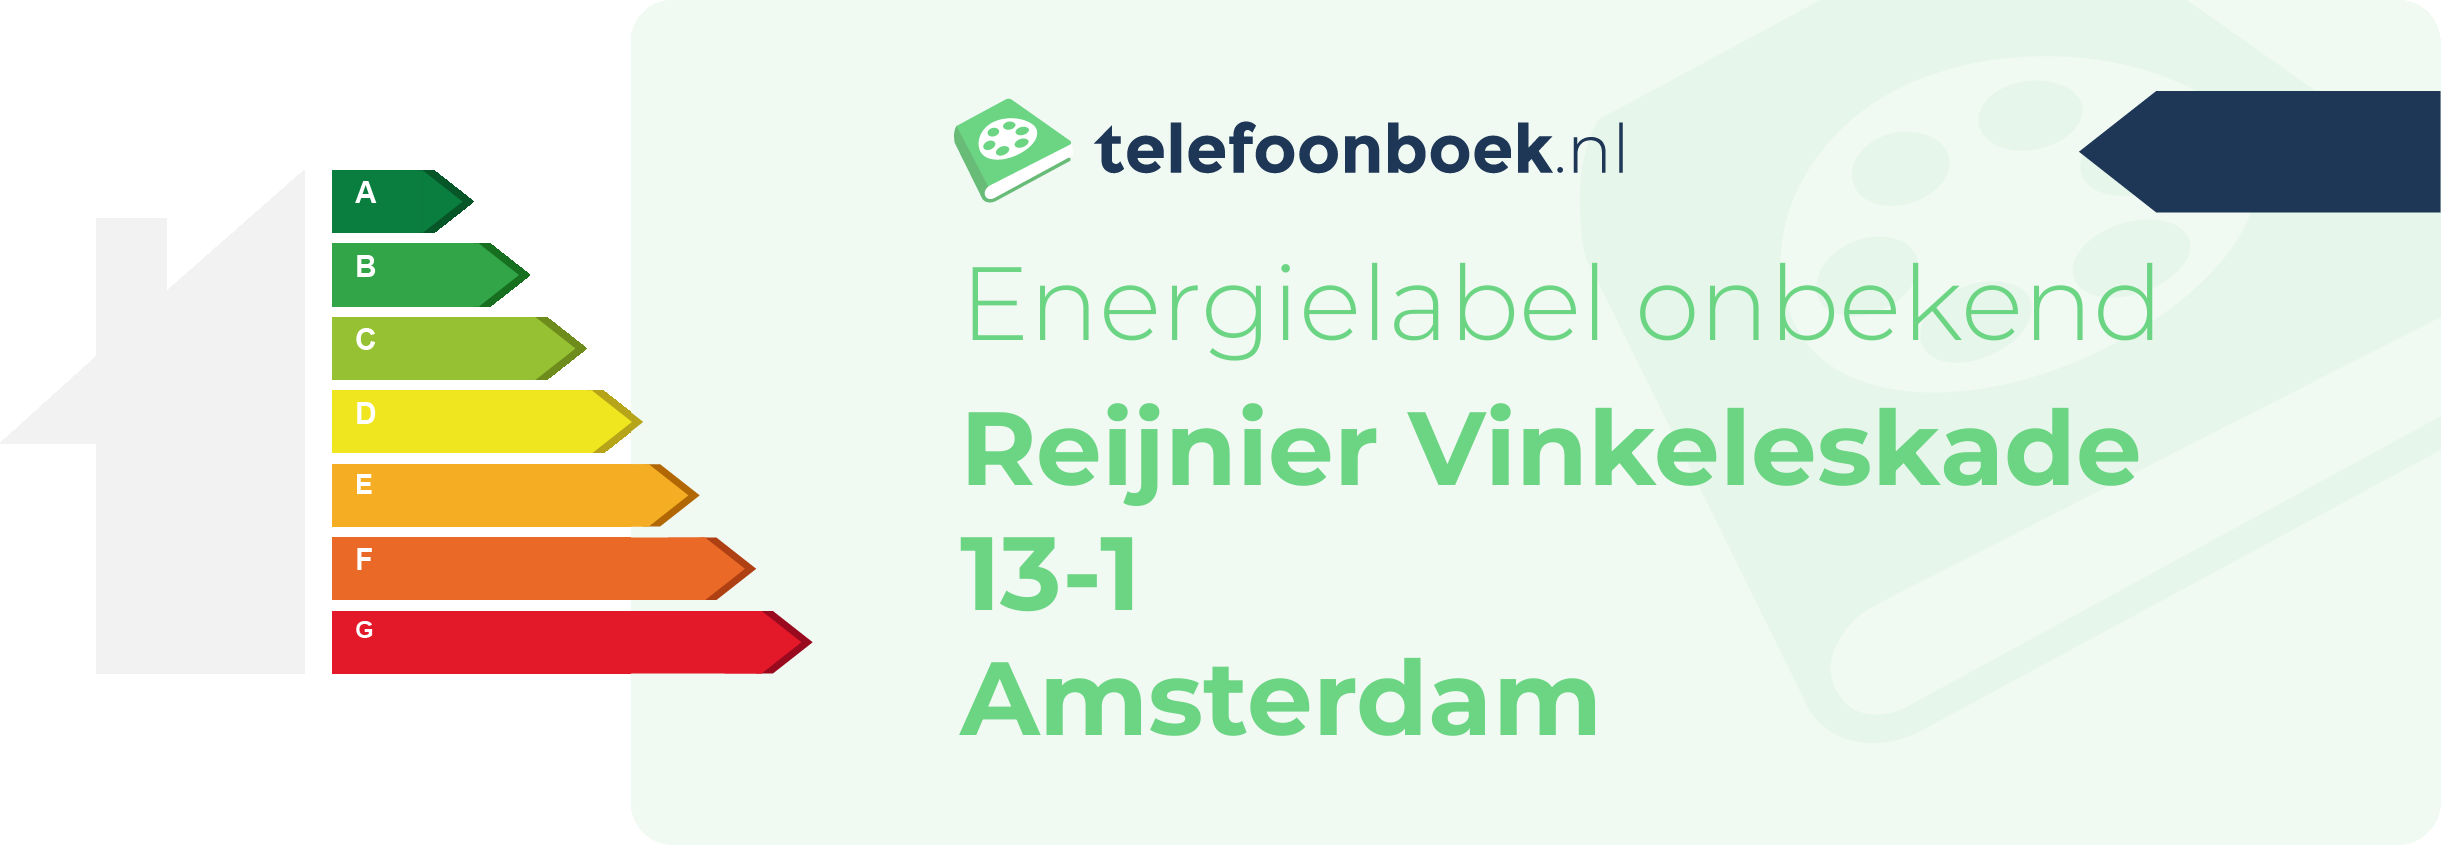 Energielabel Reijnier Vinkeleskade 13-1 Amsterdam